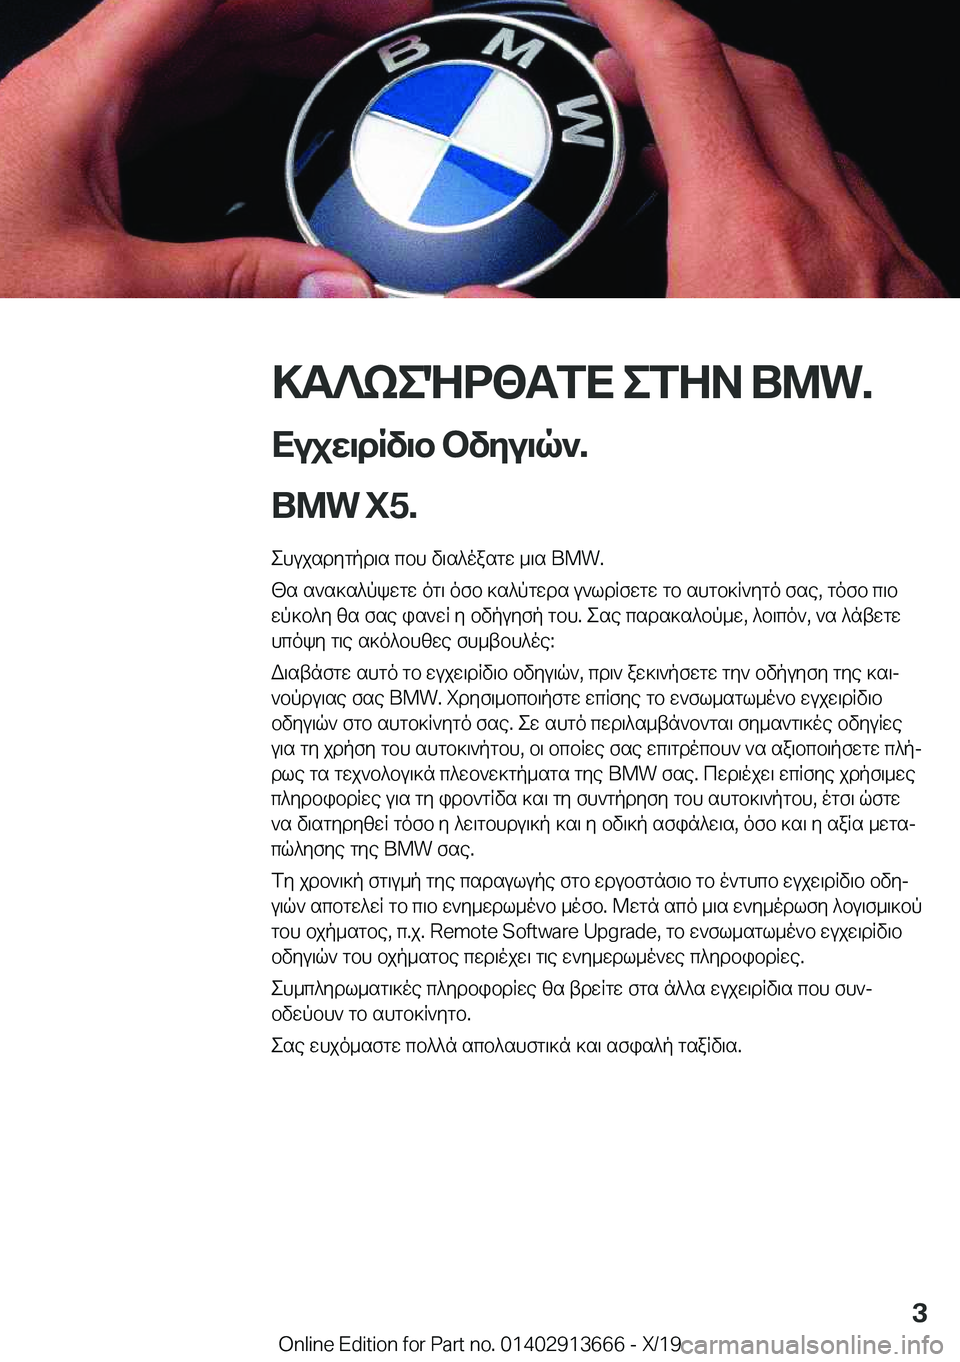 BMW X5 2020  ΟΔΗΓΌΣ ΧΡΉΣΗΣ (in Greek) >T?keNd<TfX�efZA��B�M�W�.
Xujw\dRv\b�bvyu\q`�.
�B�M�W��X�5�. ehujsdygpd\s�cbh�v\s^oasgw�_\s��B�M�W�.
[s�s`s]s^pkwgw�o